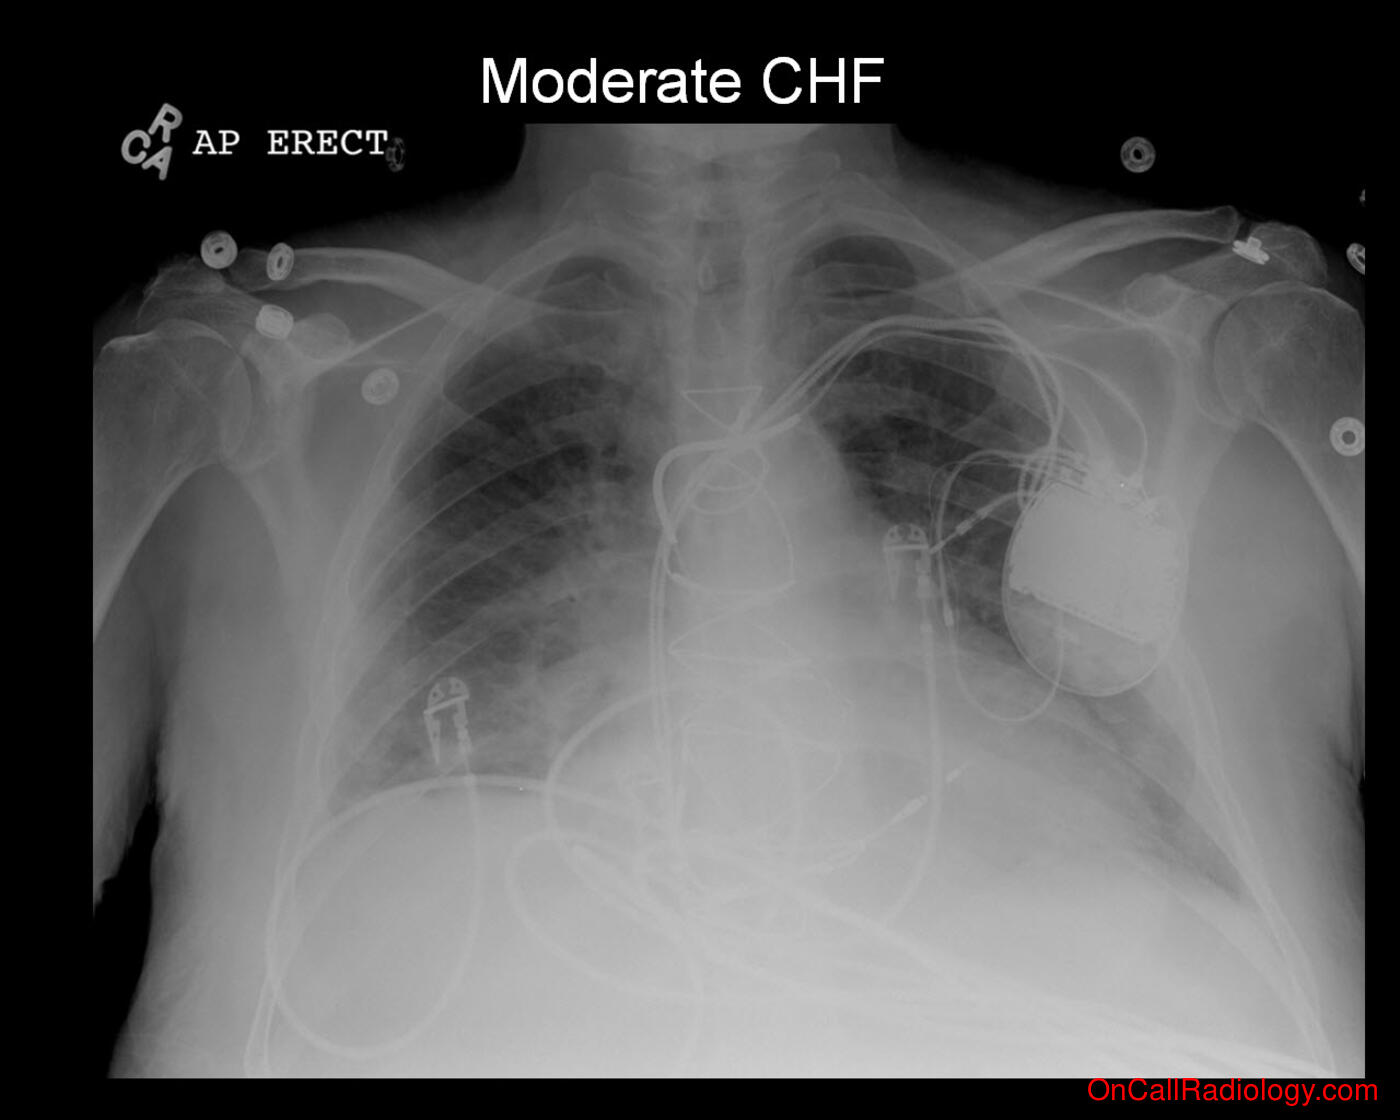 CHF (Moderate CHF - Plain film, Radiograph)